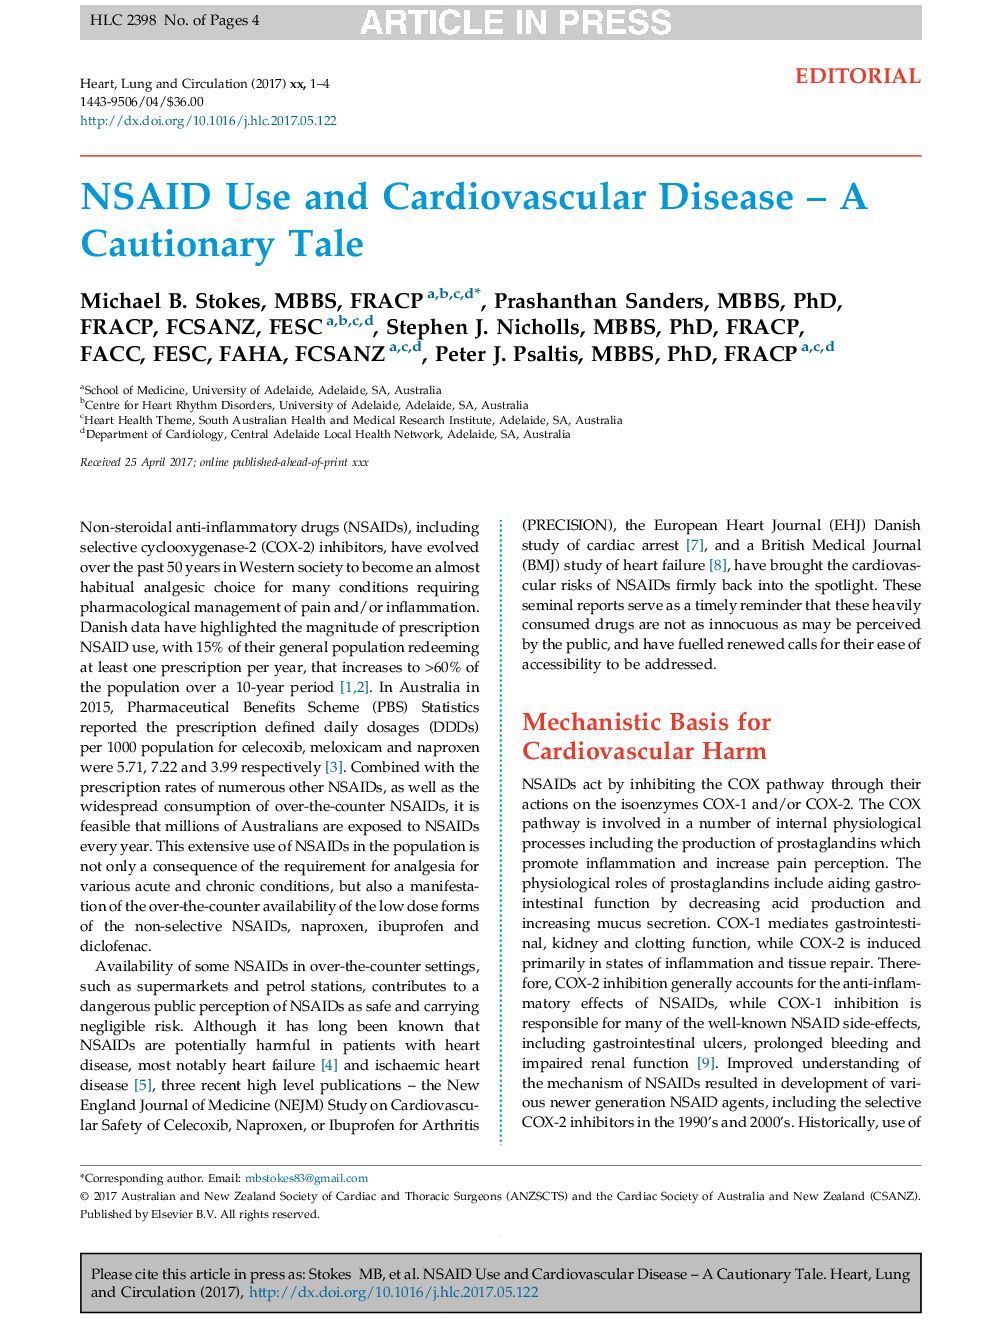 NSAID Use and Cardiovascular Disease - A Cautionary Tale